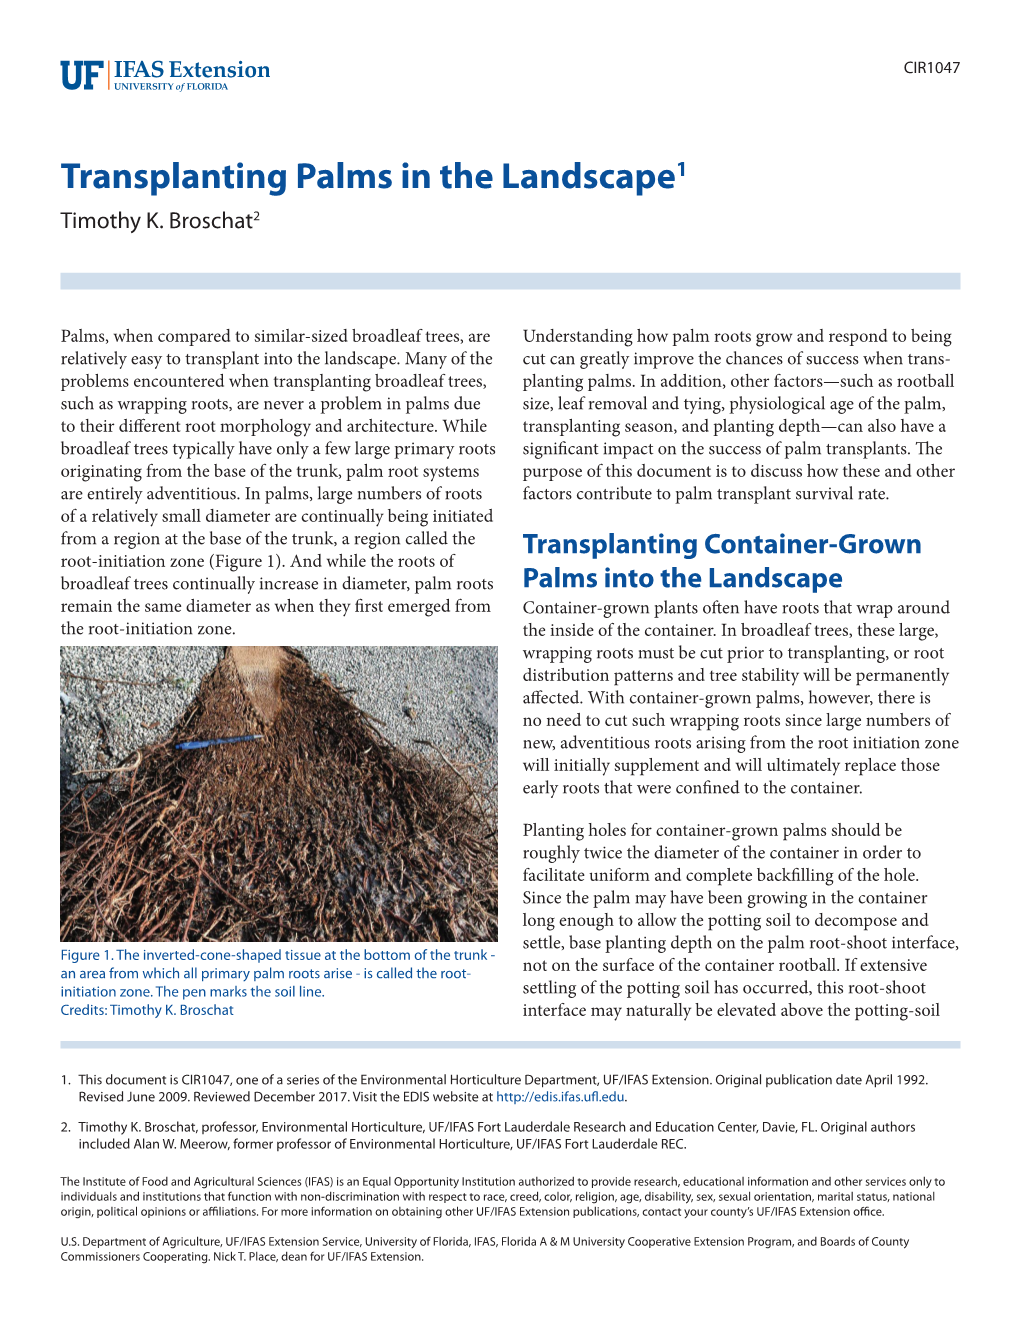 Transplanting Palms in the Landscape1 Timothy K